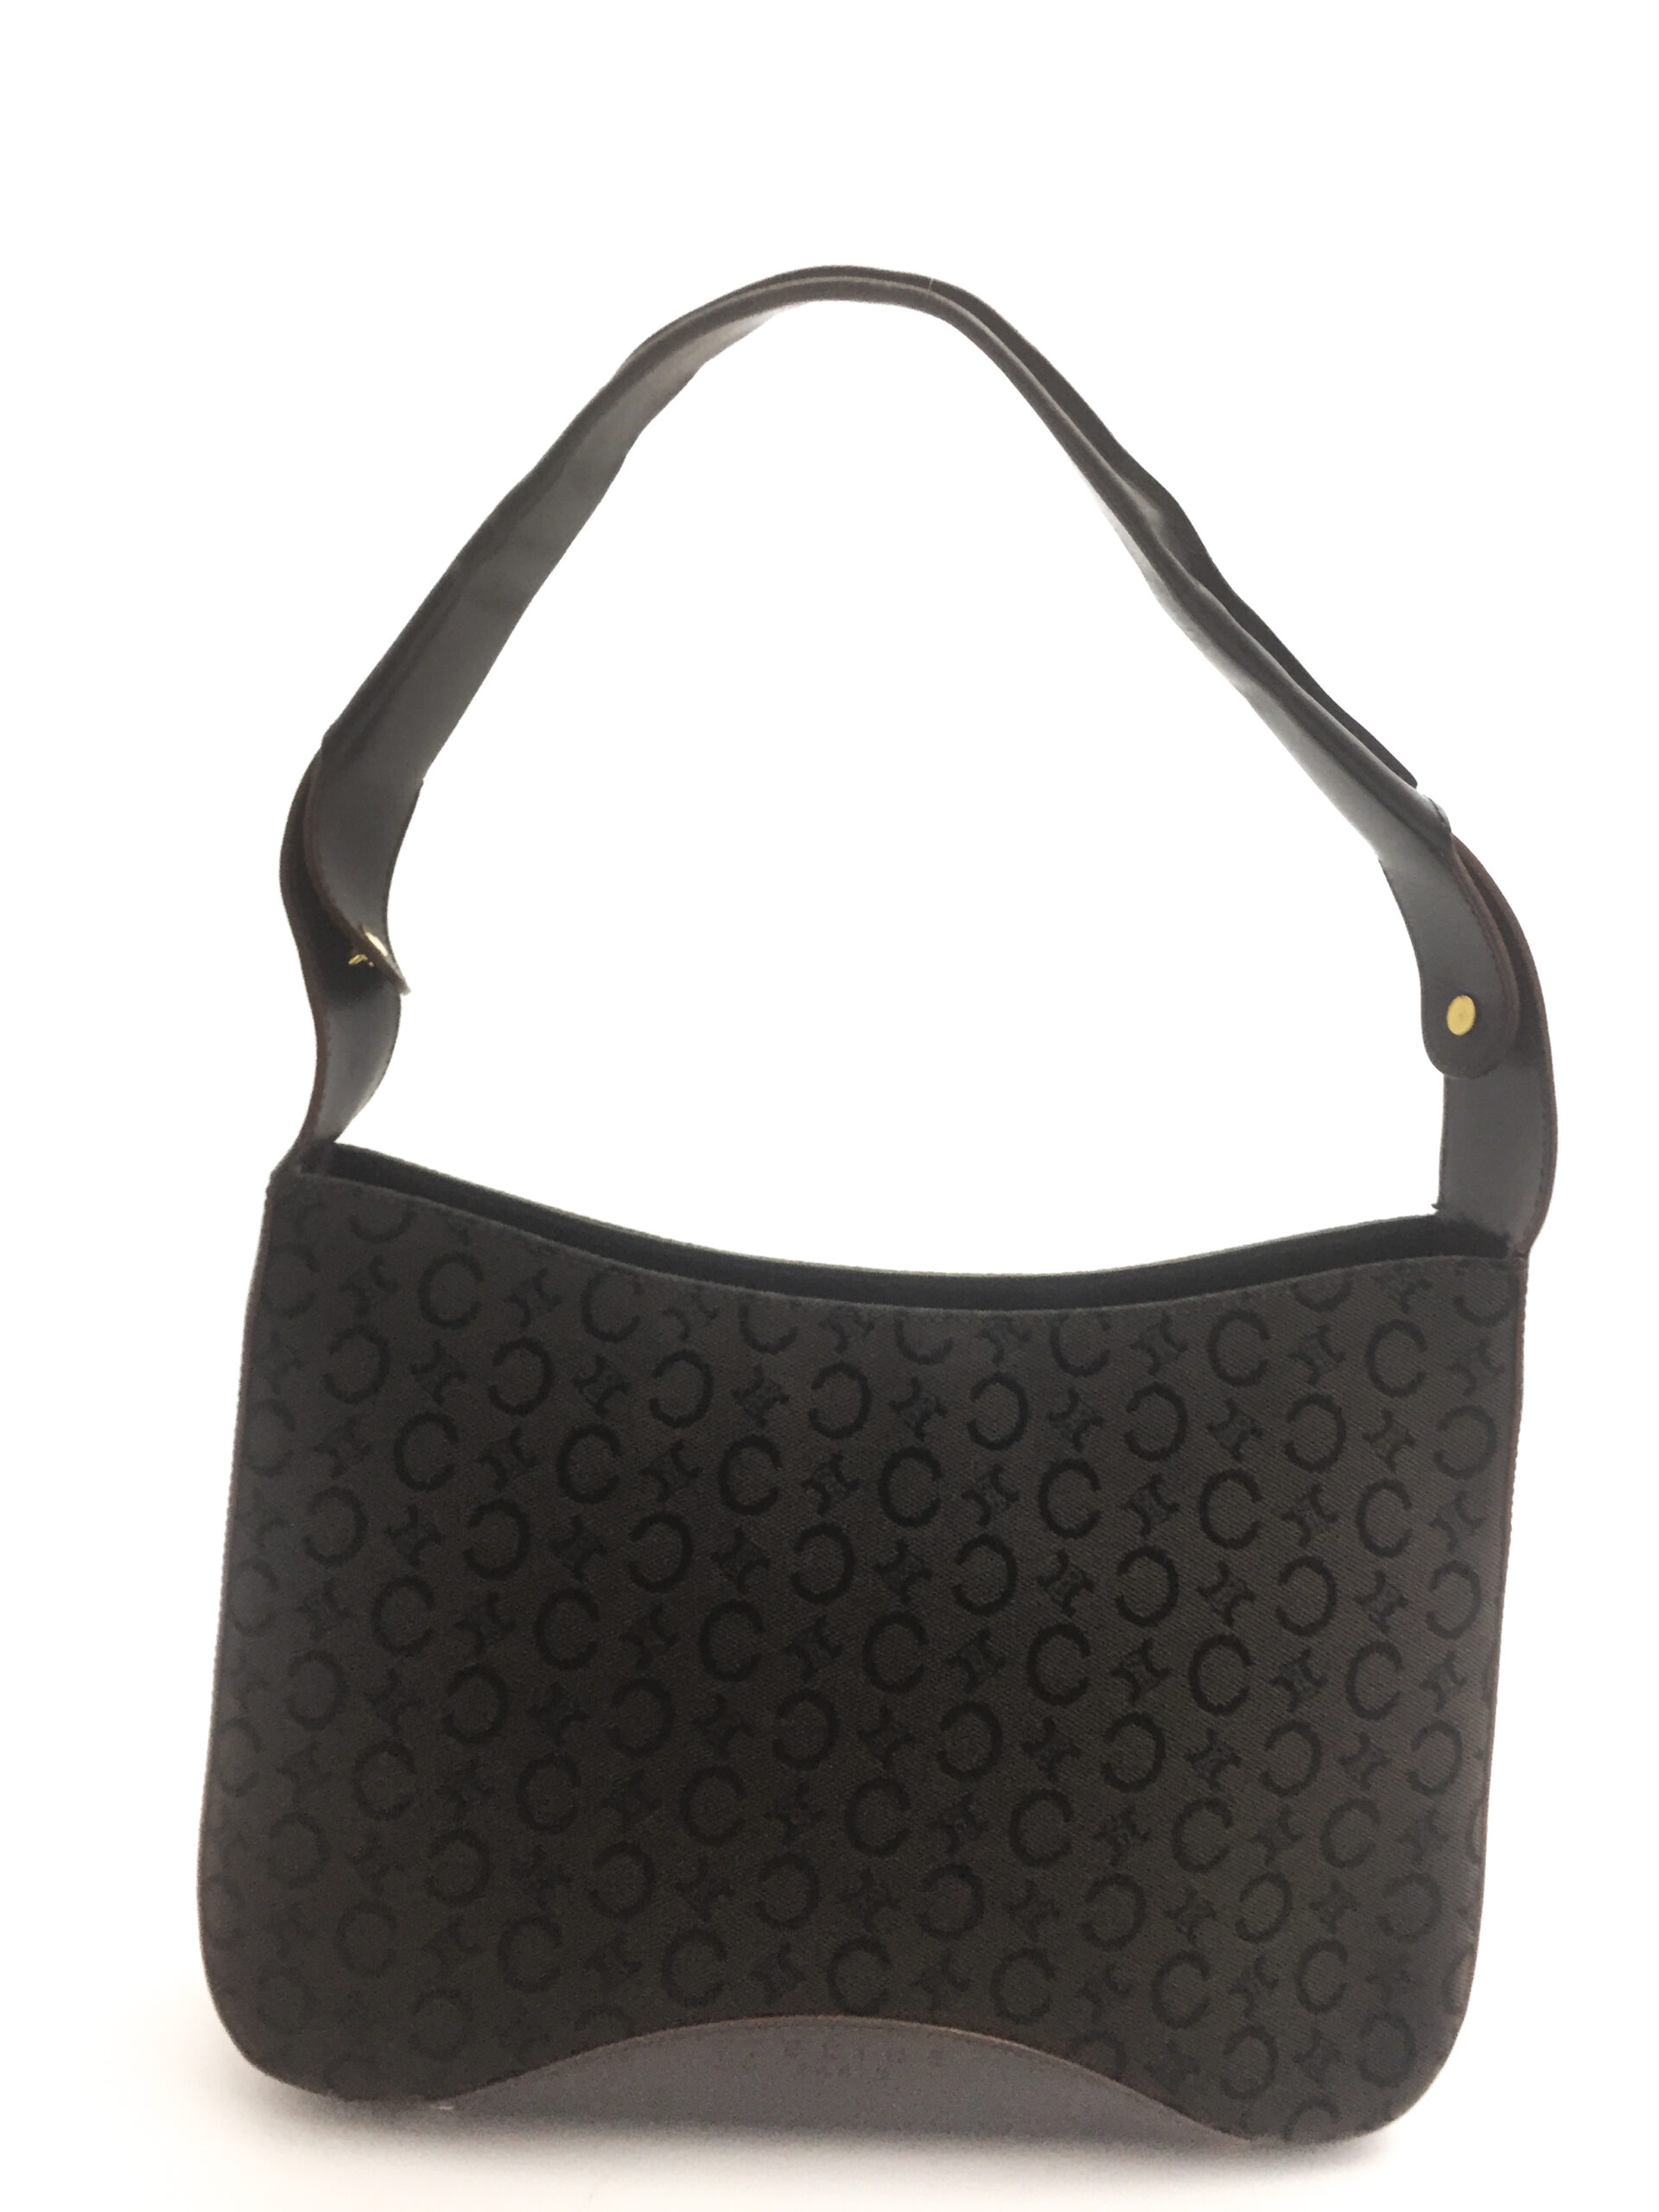 Dark Brown Part-Leather Shoulder Bag - Luxury by